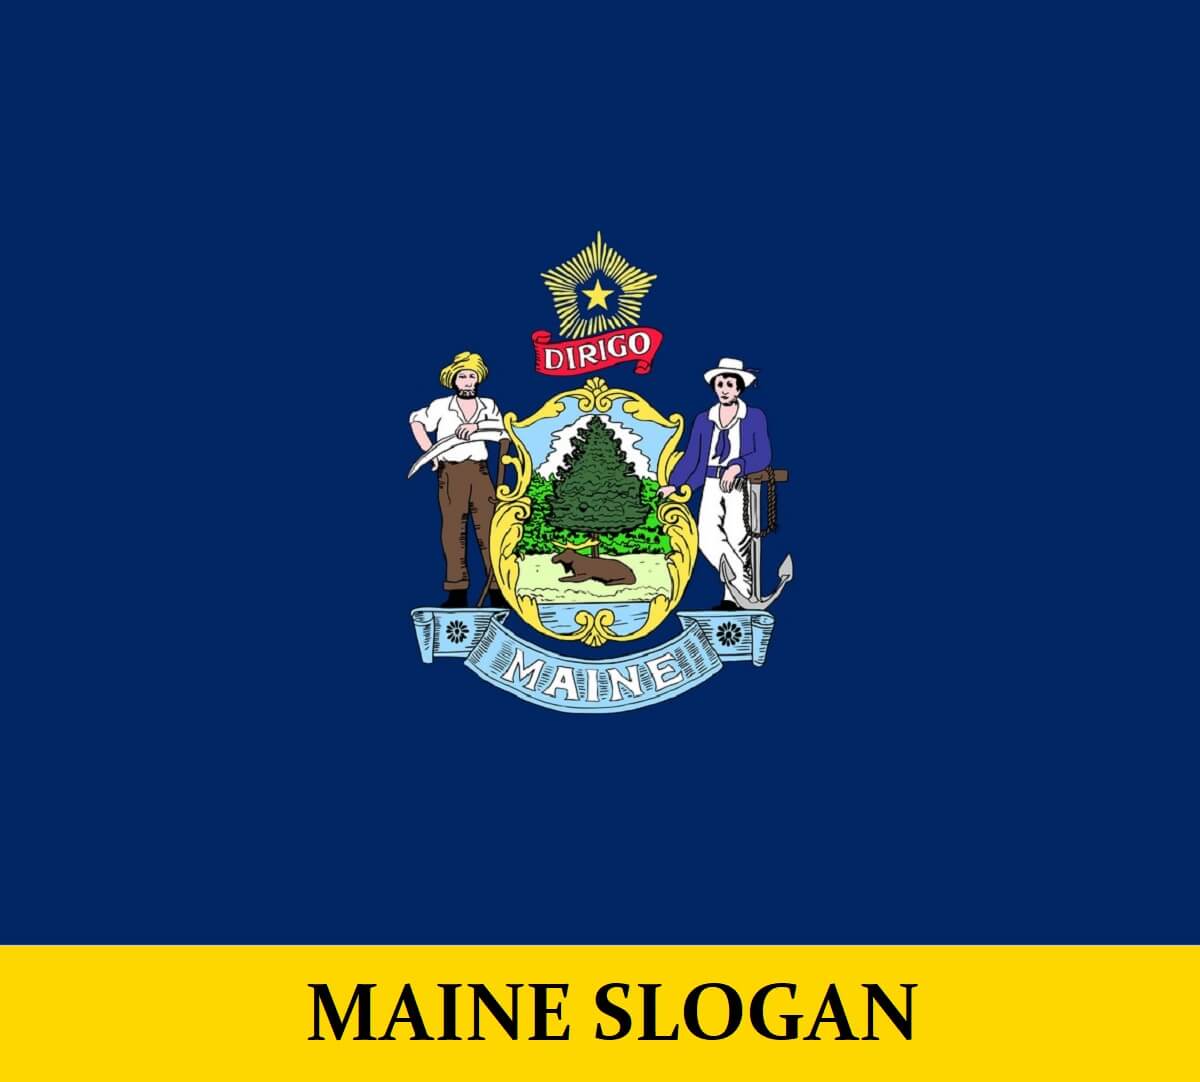 Slogan for Maine